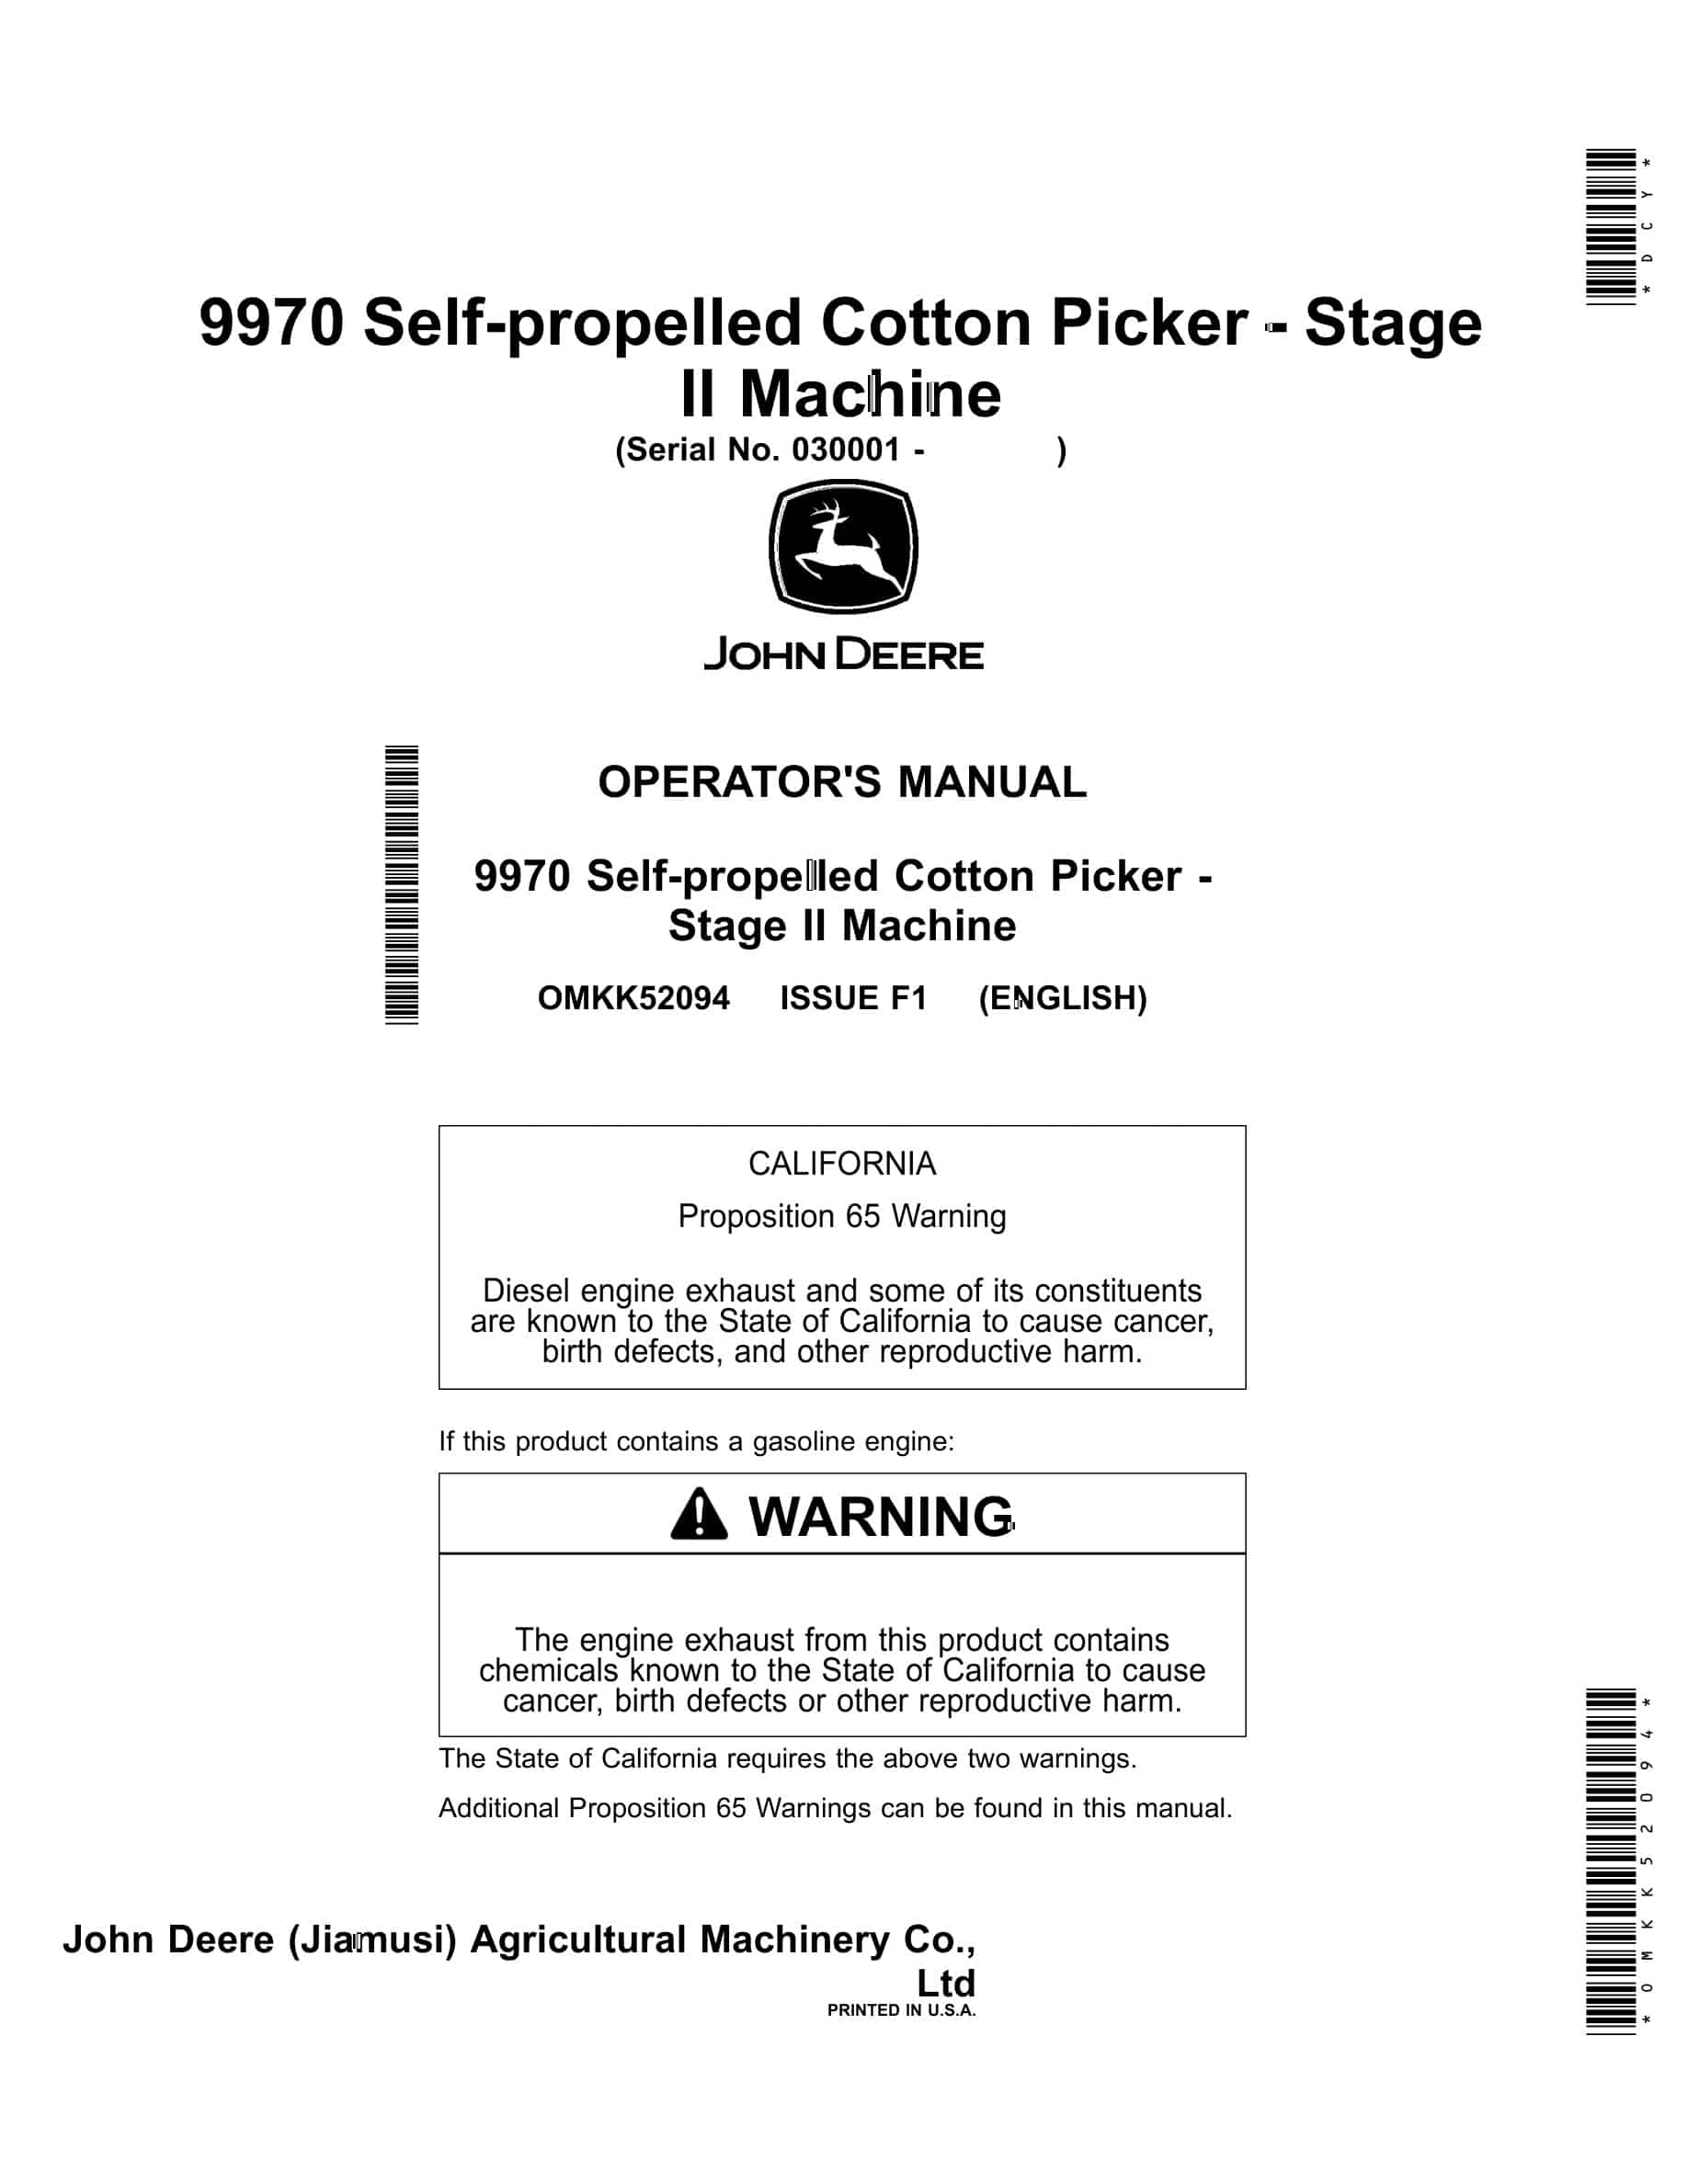 John Deere 9970 Self-propelled Cotton Picker Stage II Machine Operator Manual OMKK52094-1